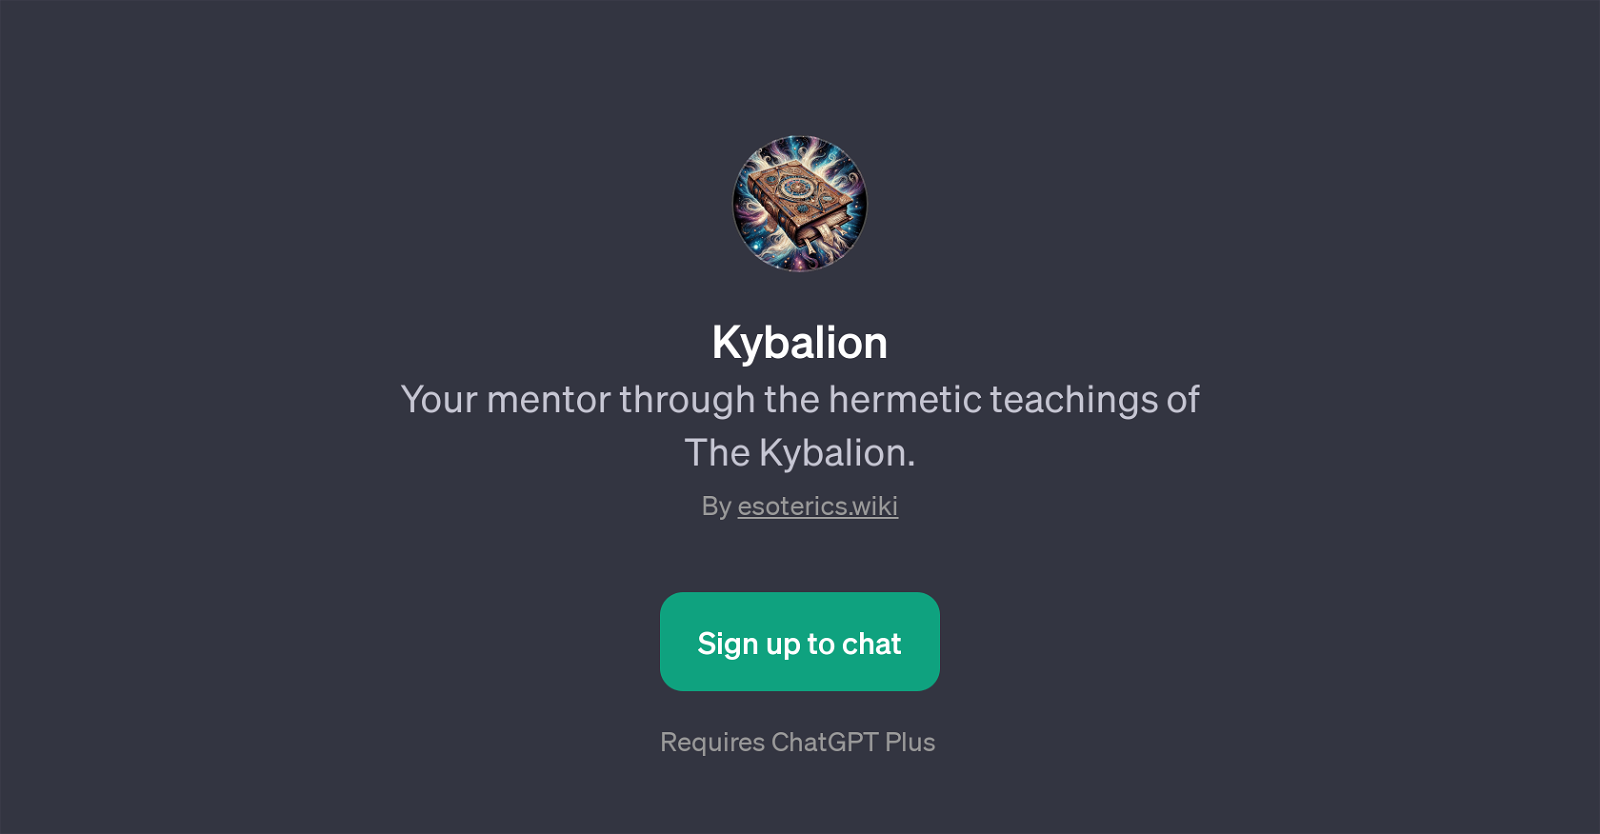 Kybalion website